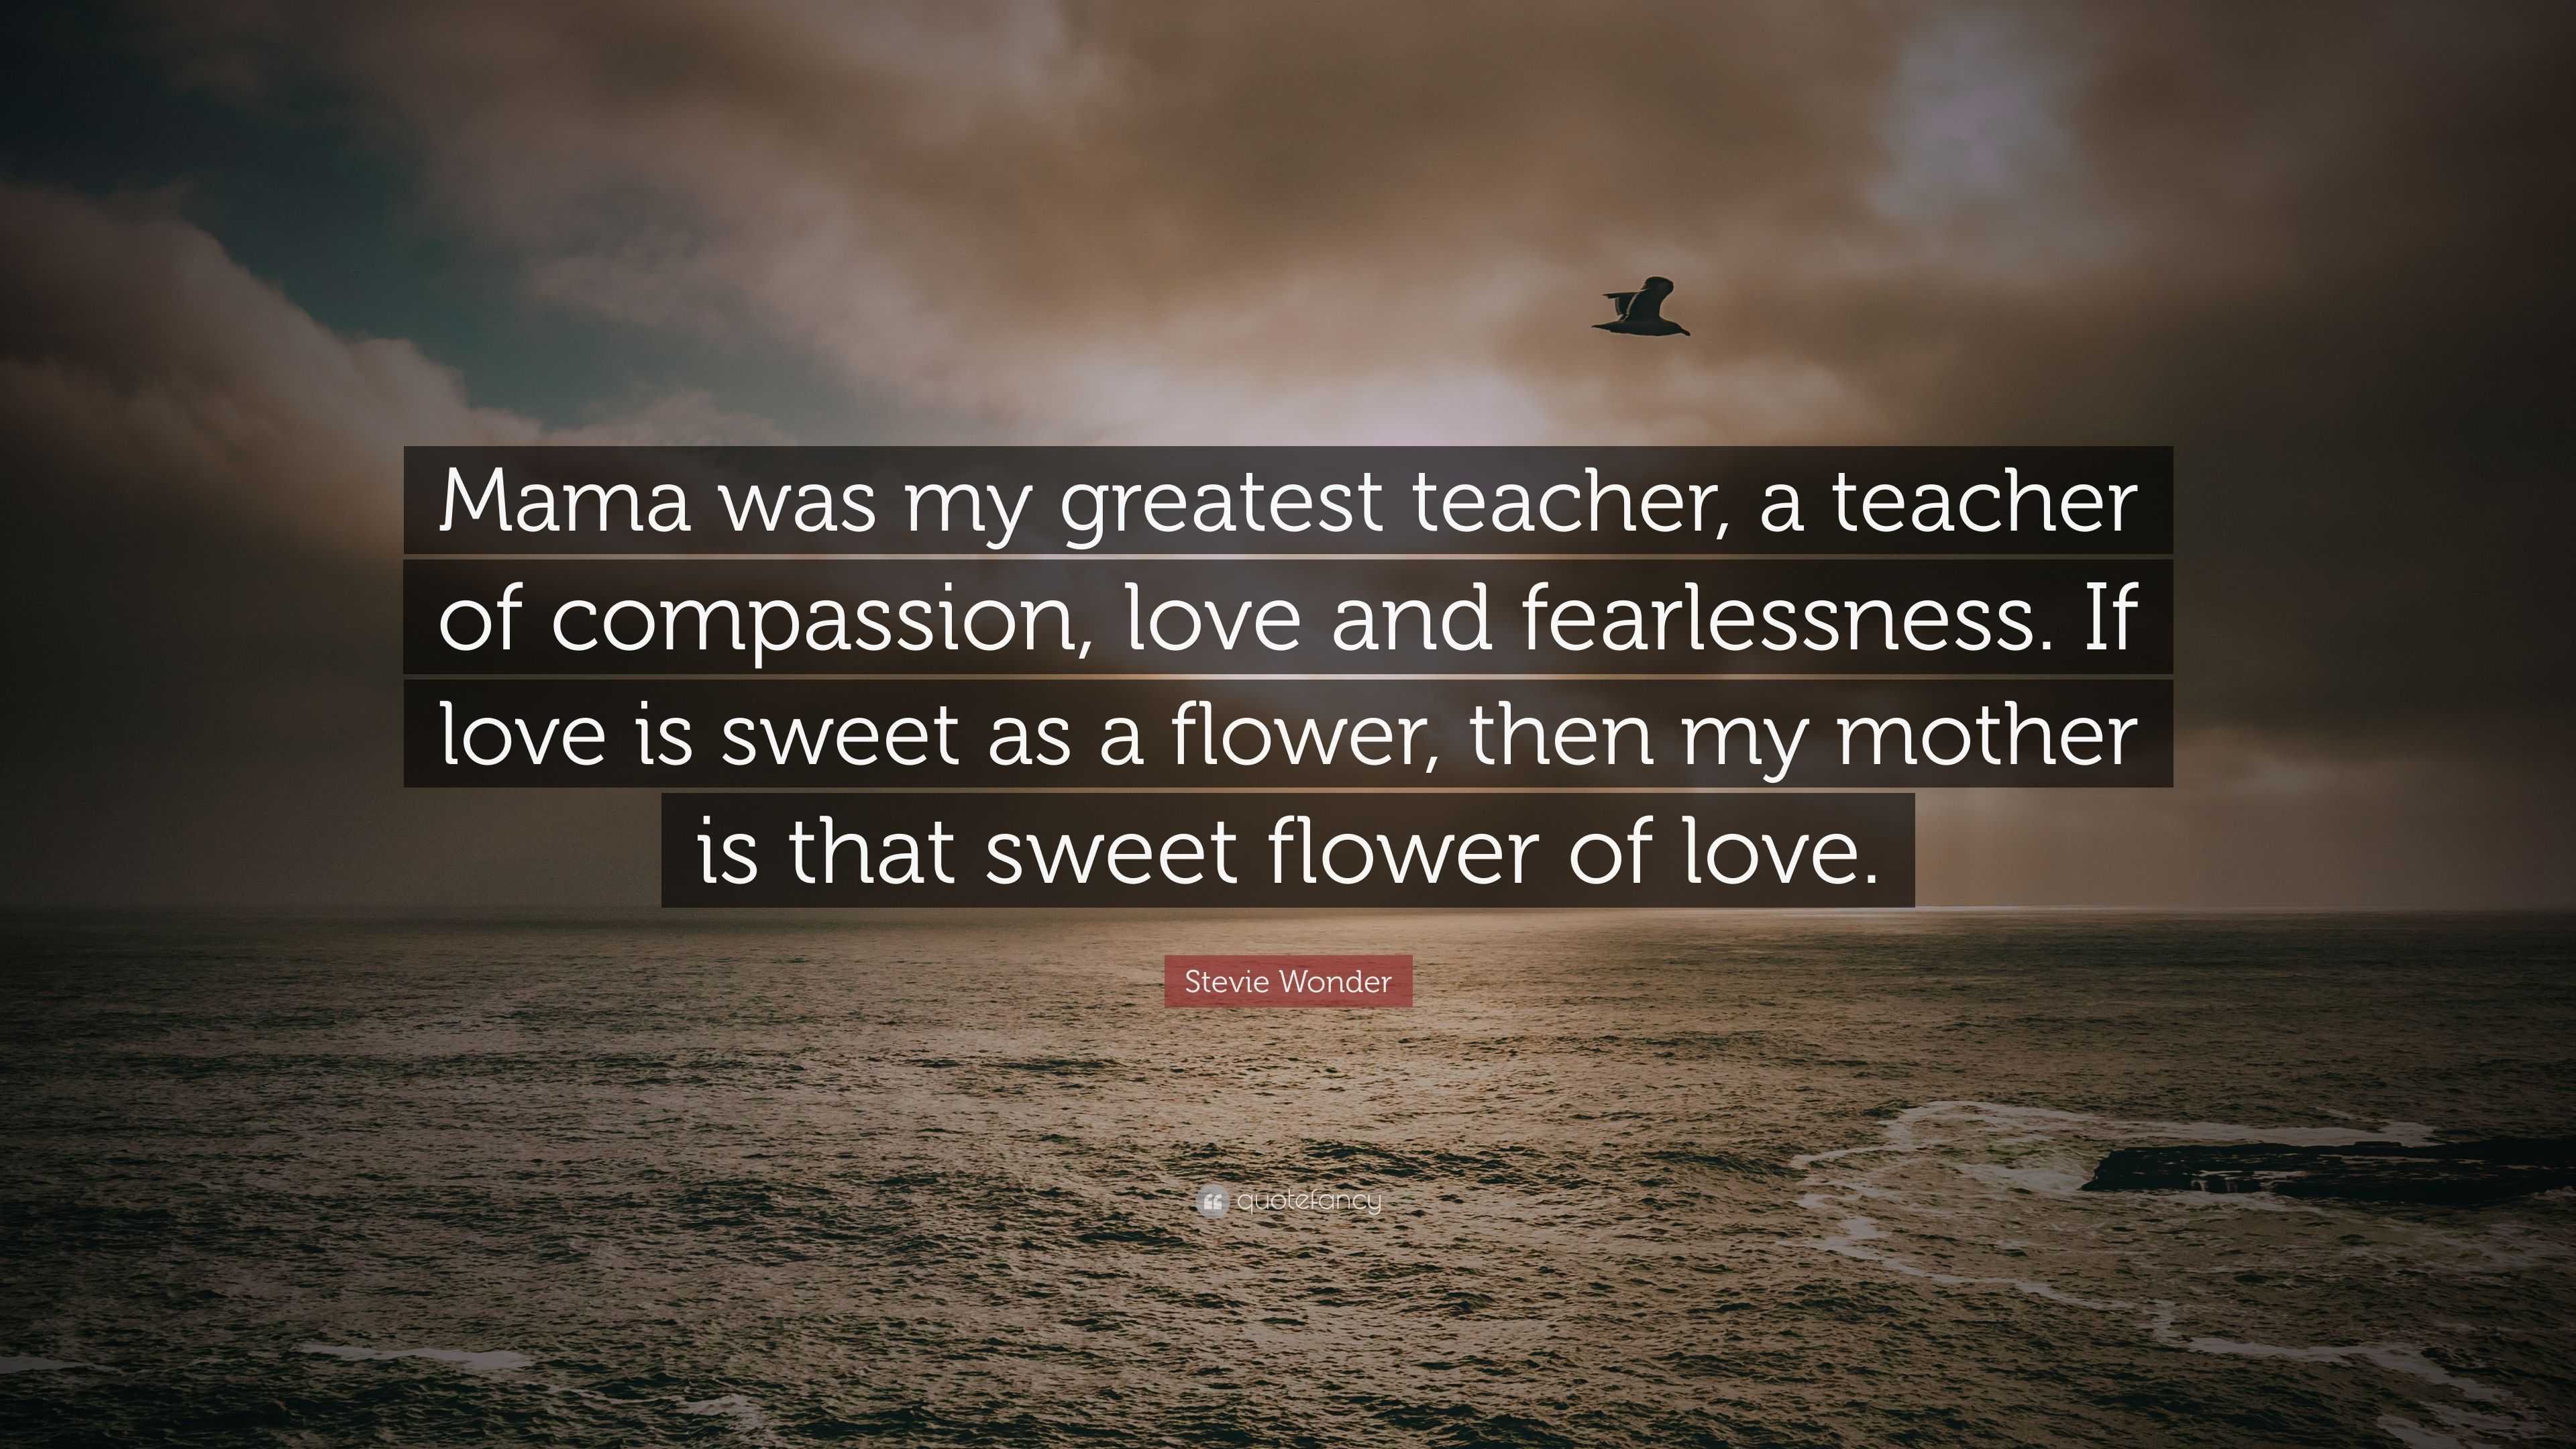 Stevie Wonder Quote: “Mama was my greatest teacher, a teacher of ...